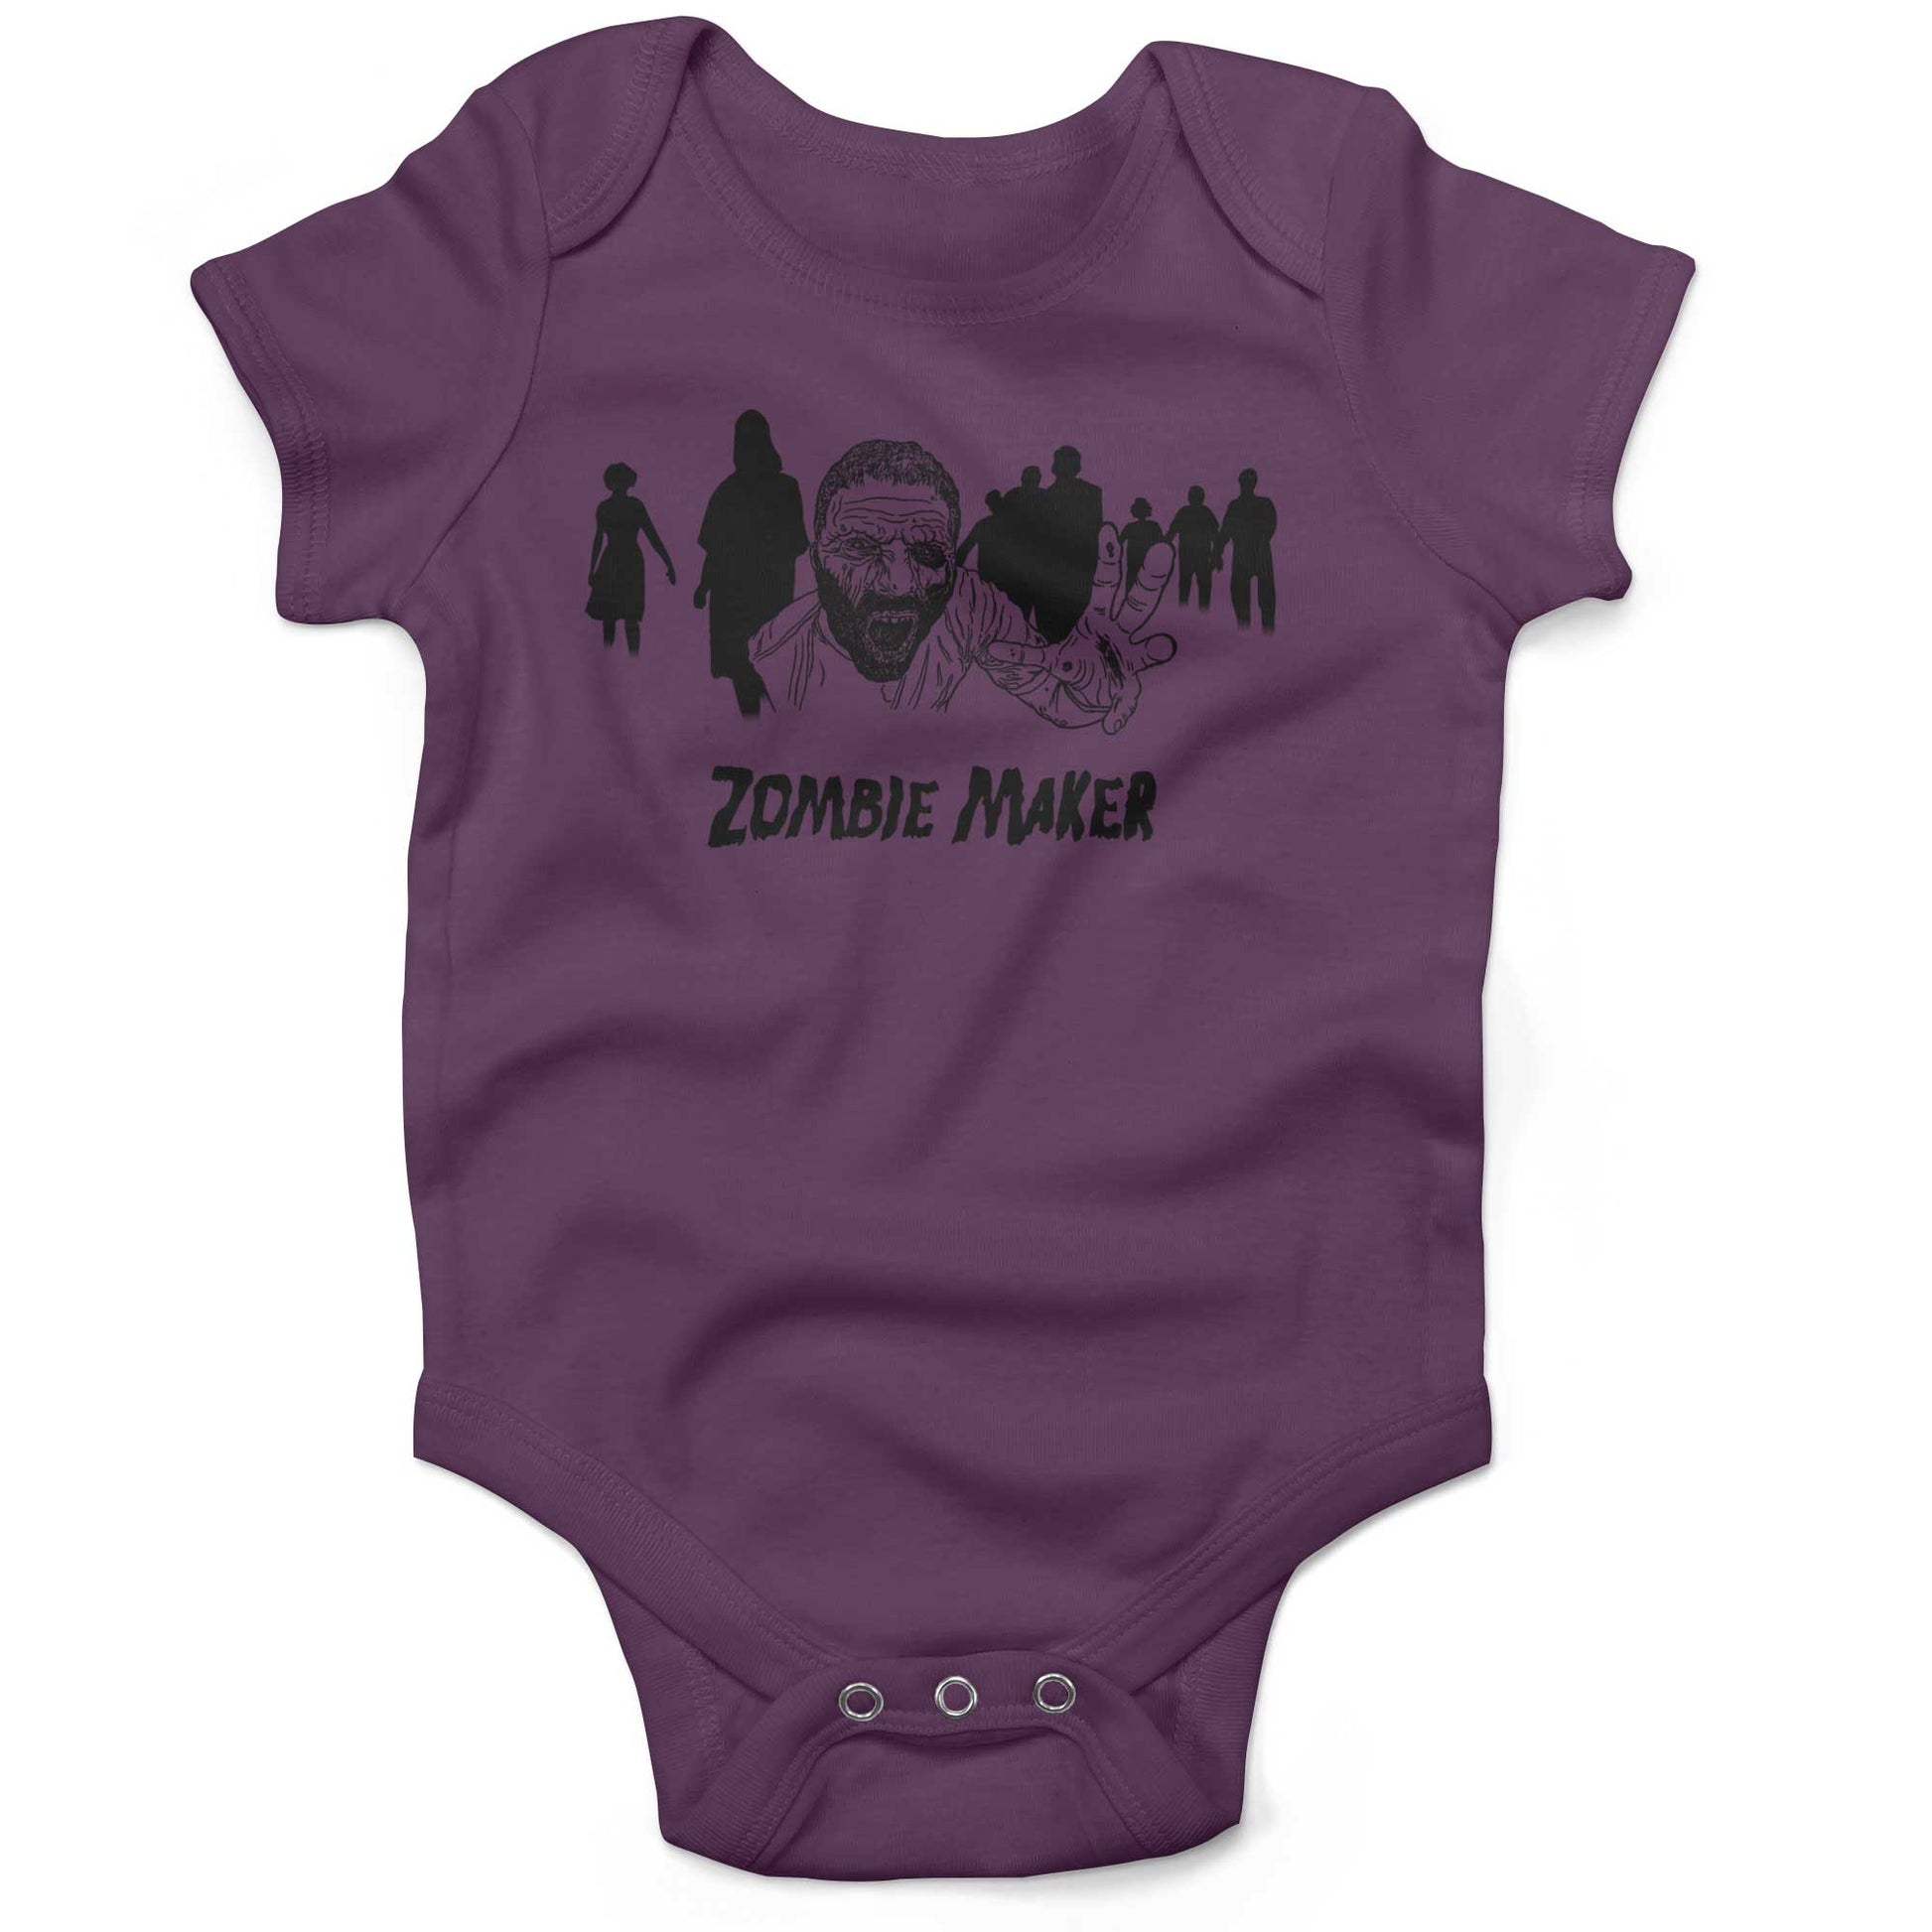 Zombie Maker Infant Bodysuit or Raglan Baby Tee-Organic Purple-3-6 months